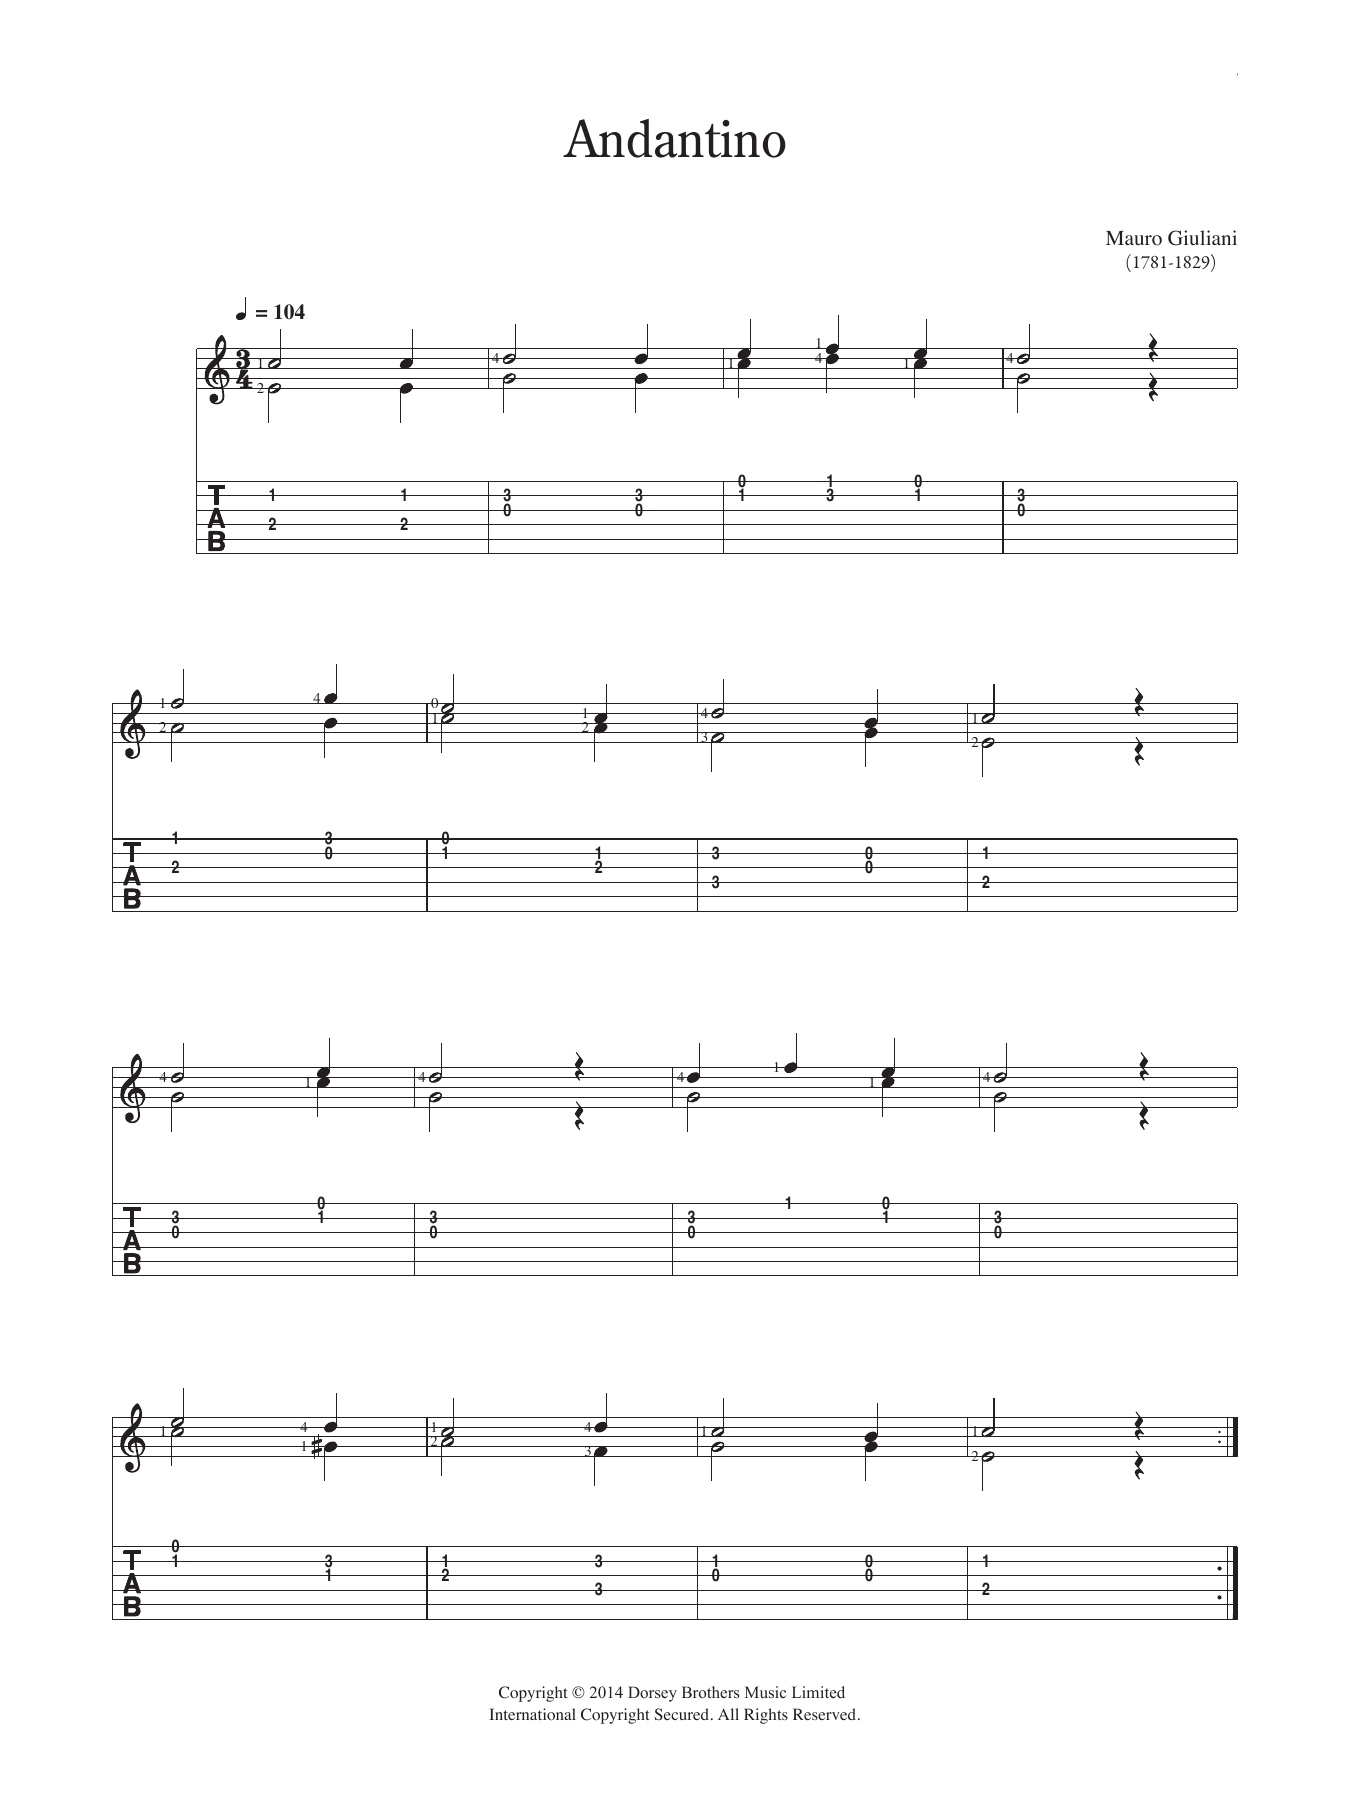 Mauro Giuliani Andantino Sheet Music Notes & Chords for Guitar - Download or Print PDF